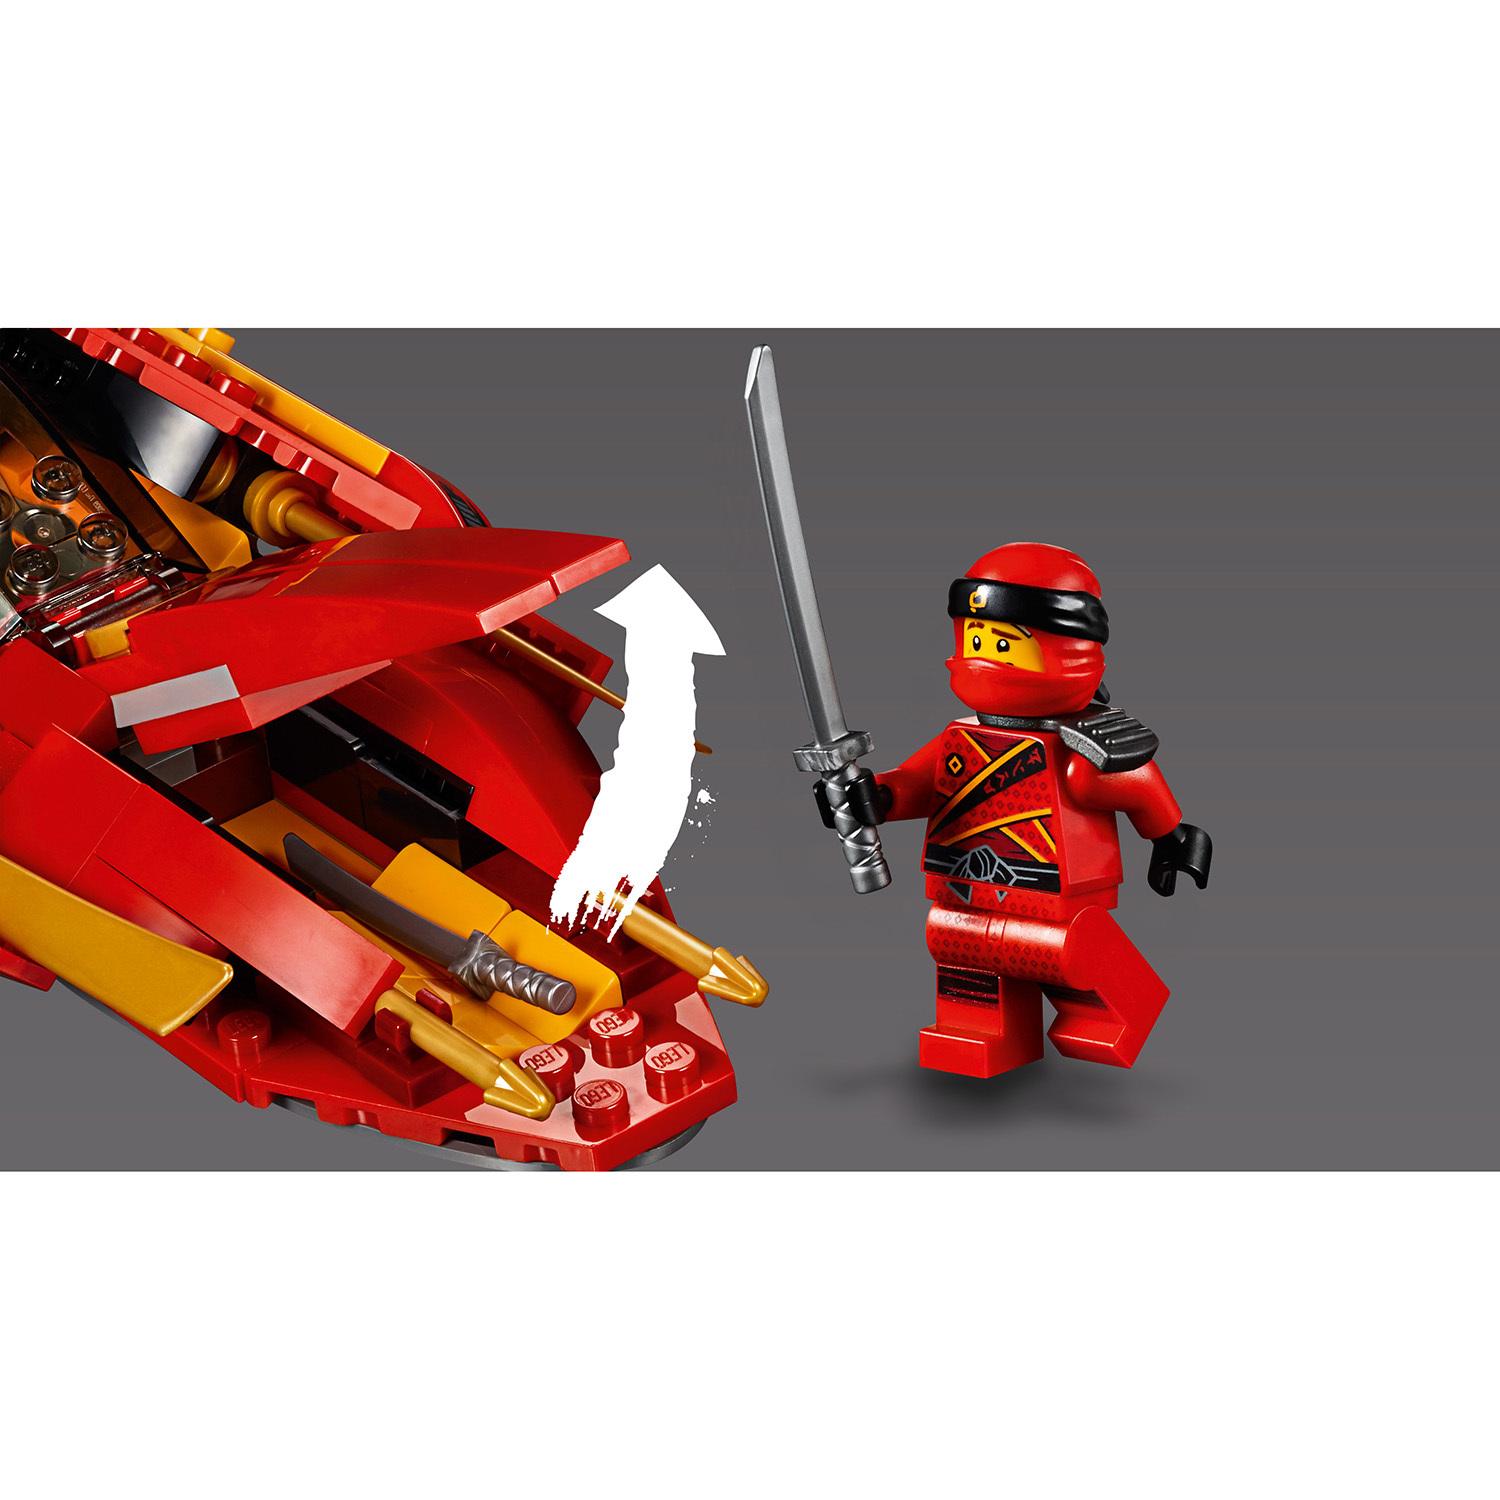 Конструктор из серии Lego Ninjago - Катана V11  